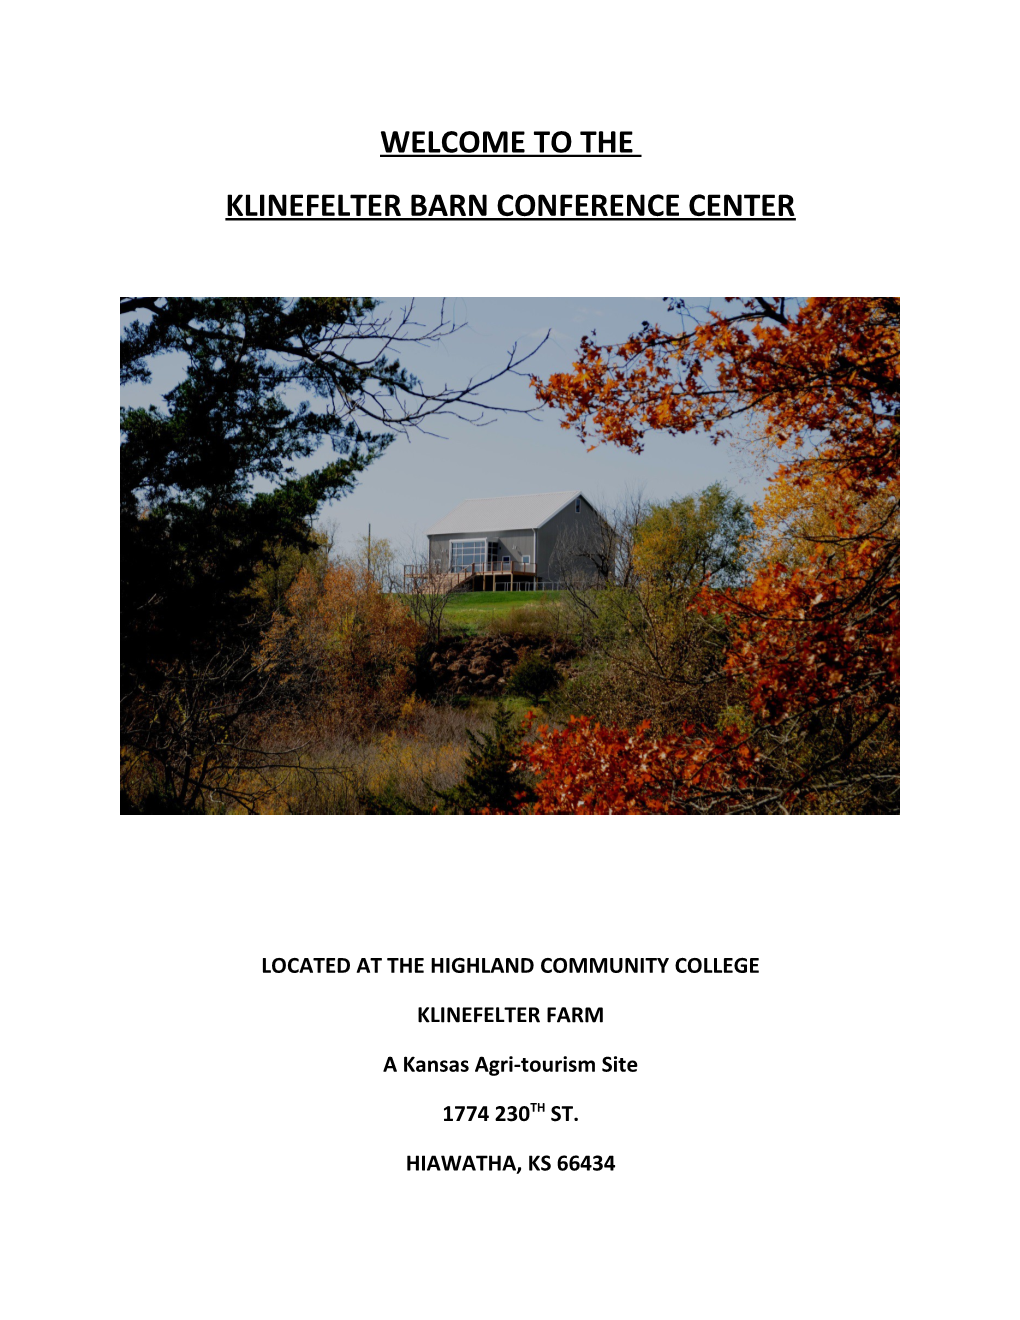 Klinefelter Barn Conference Center